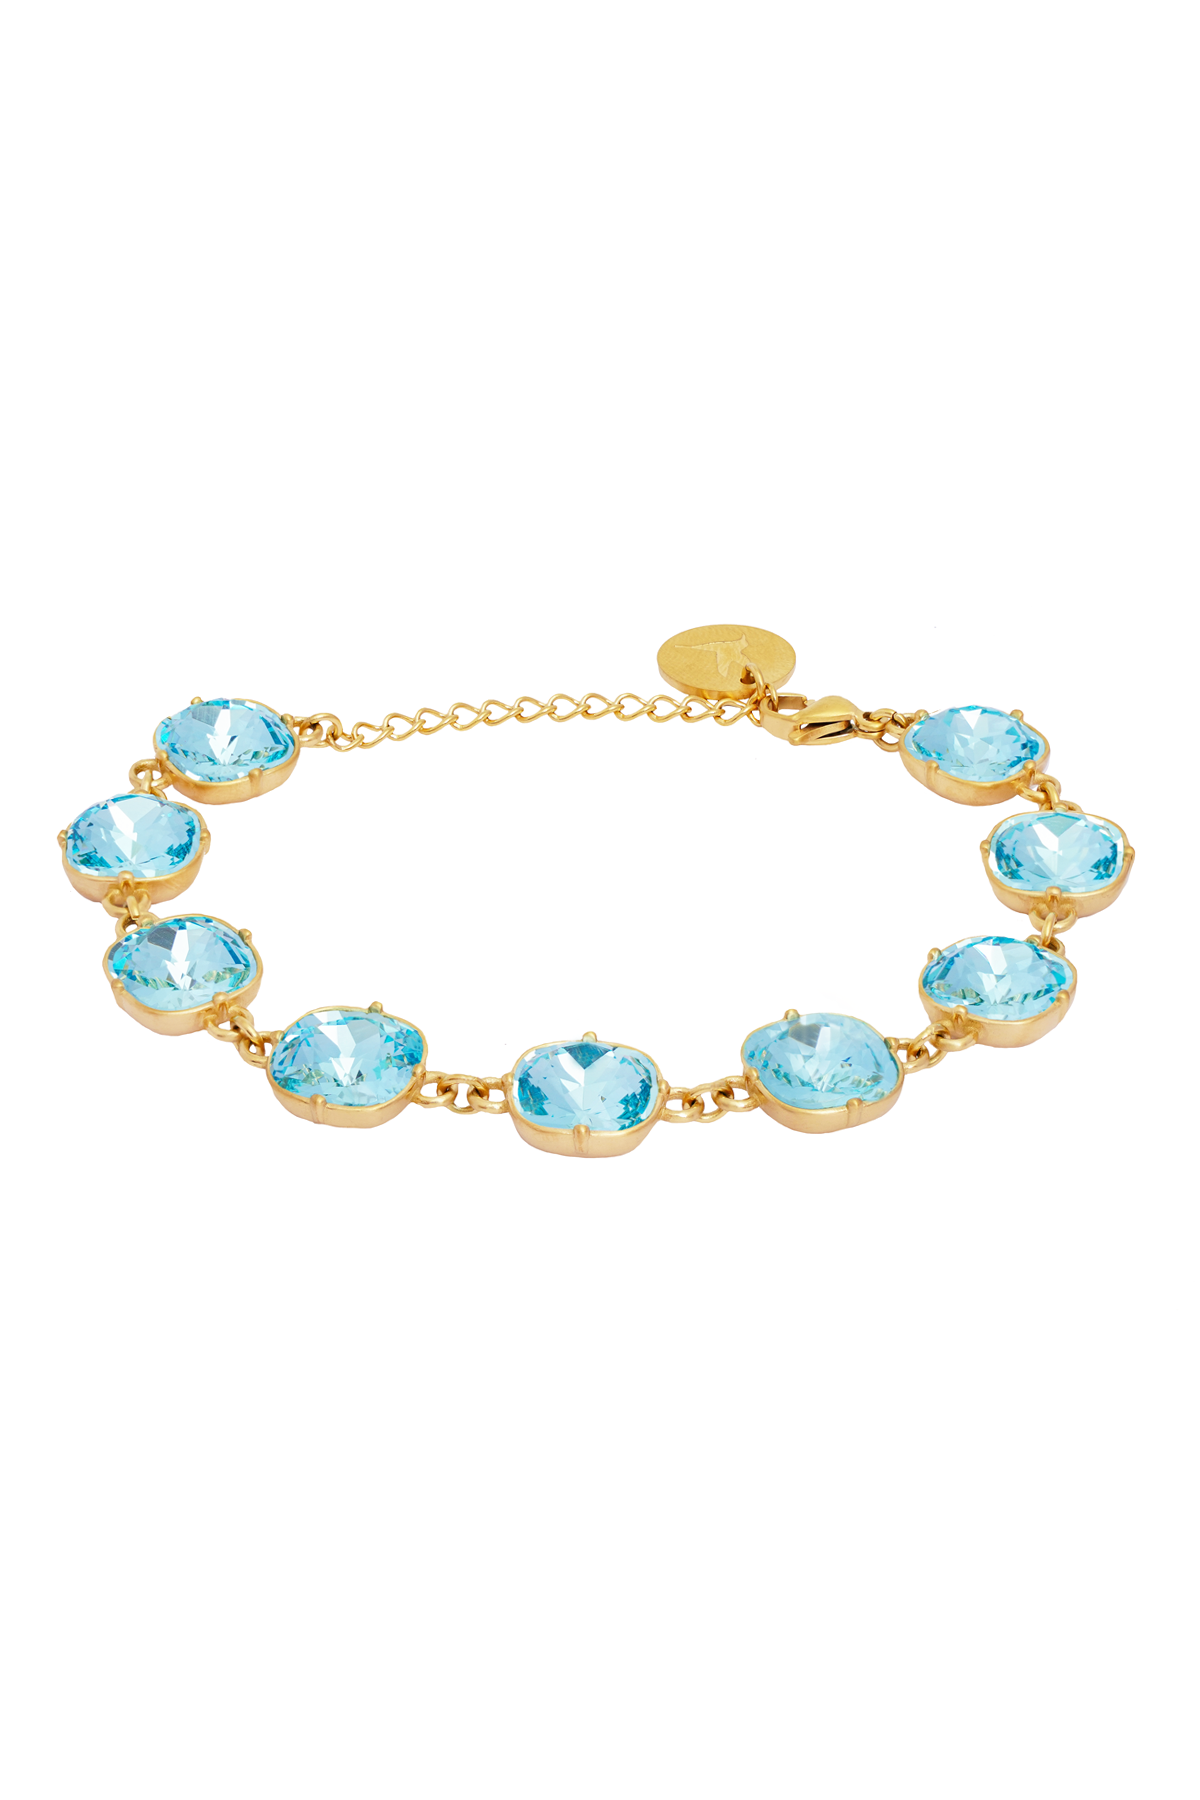 Carla Crystal lux bracelet - Ocean blue